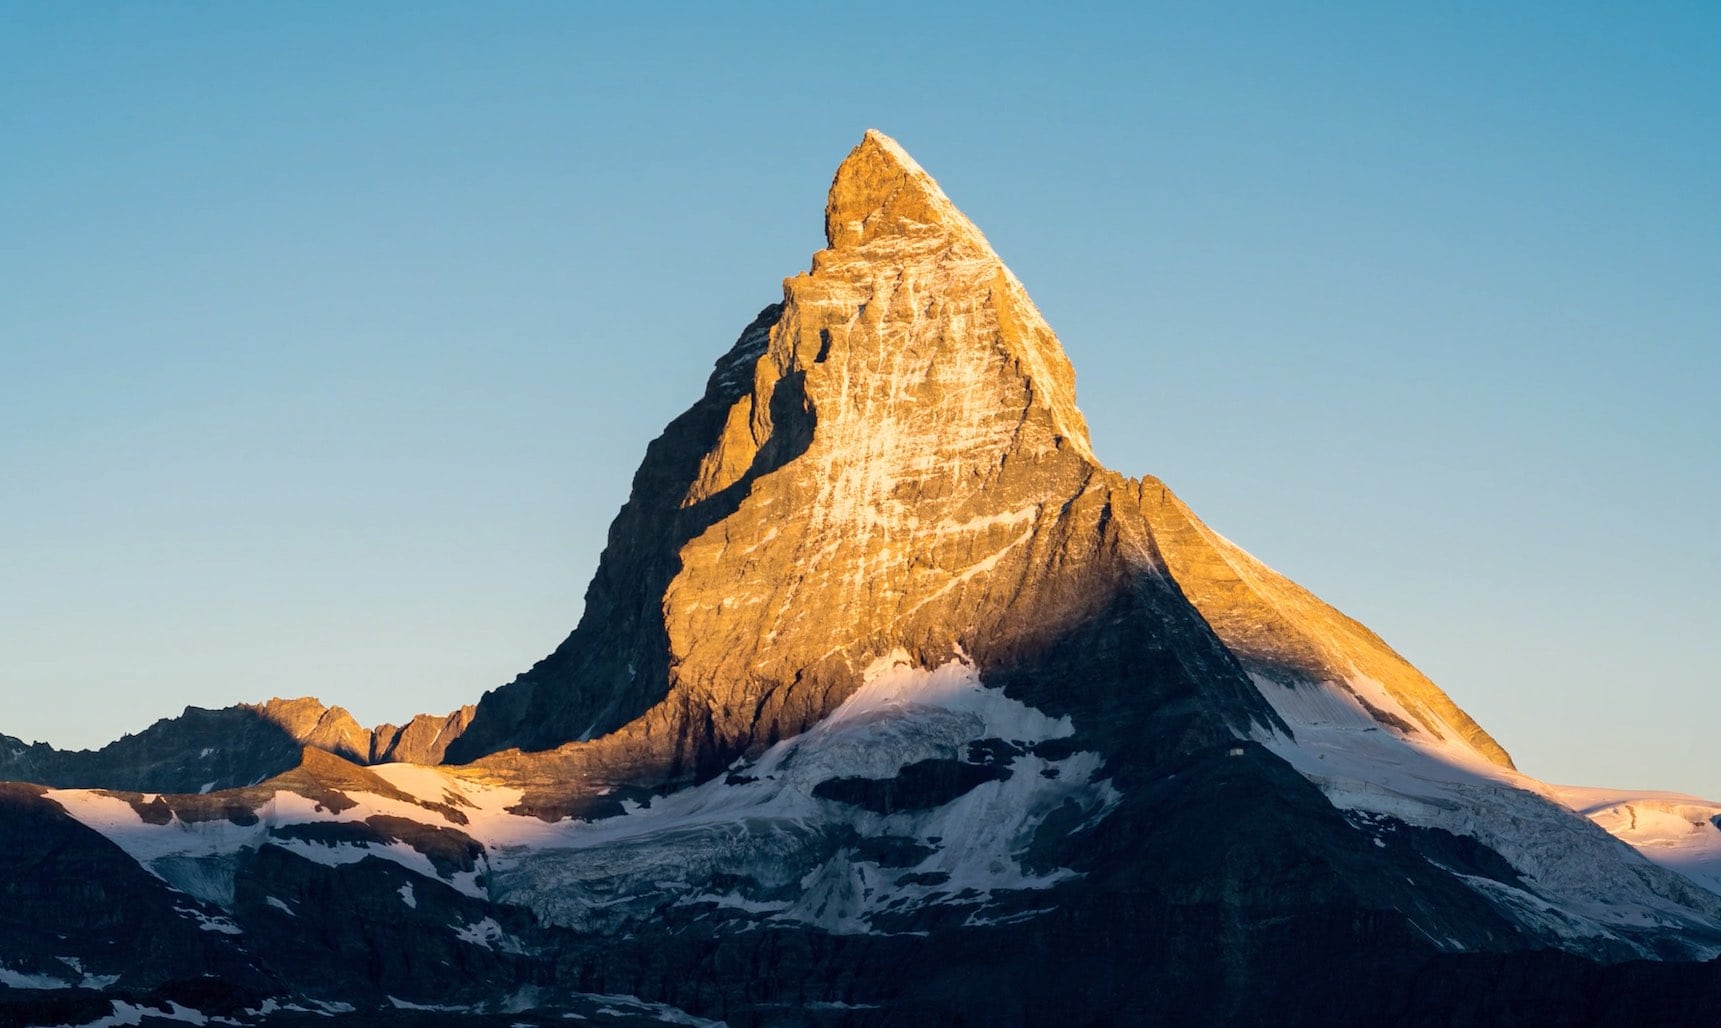 The sun rising over the Matterhorn peak